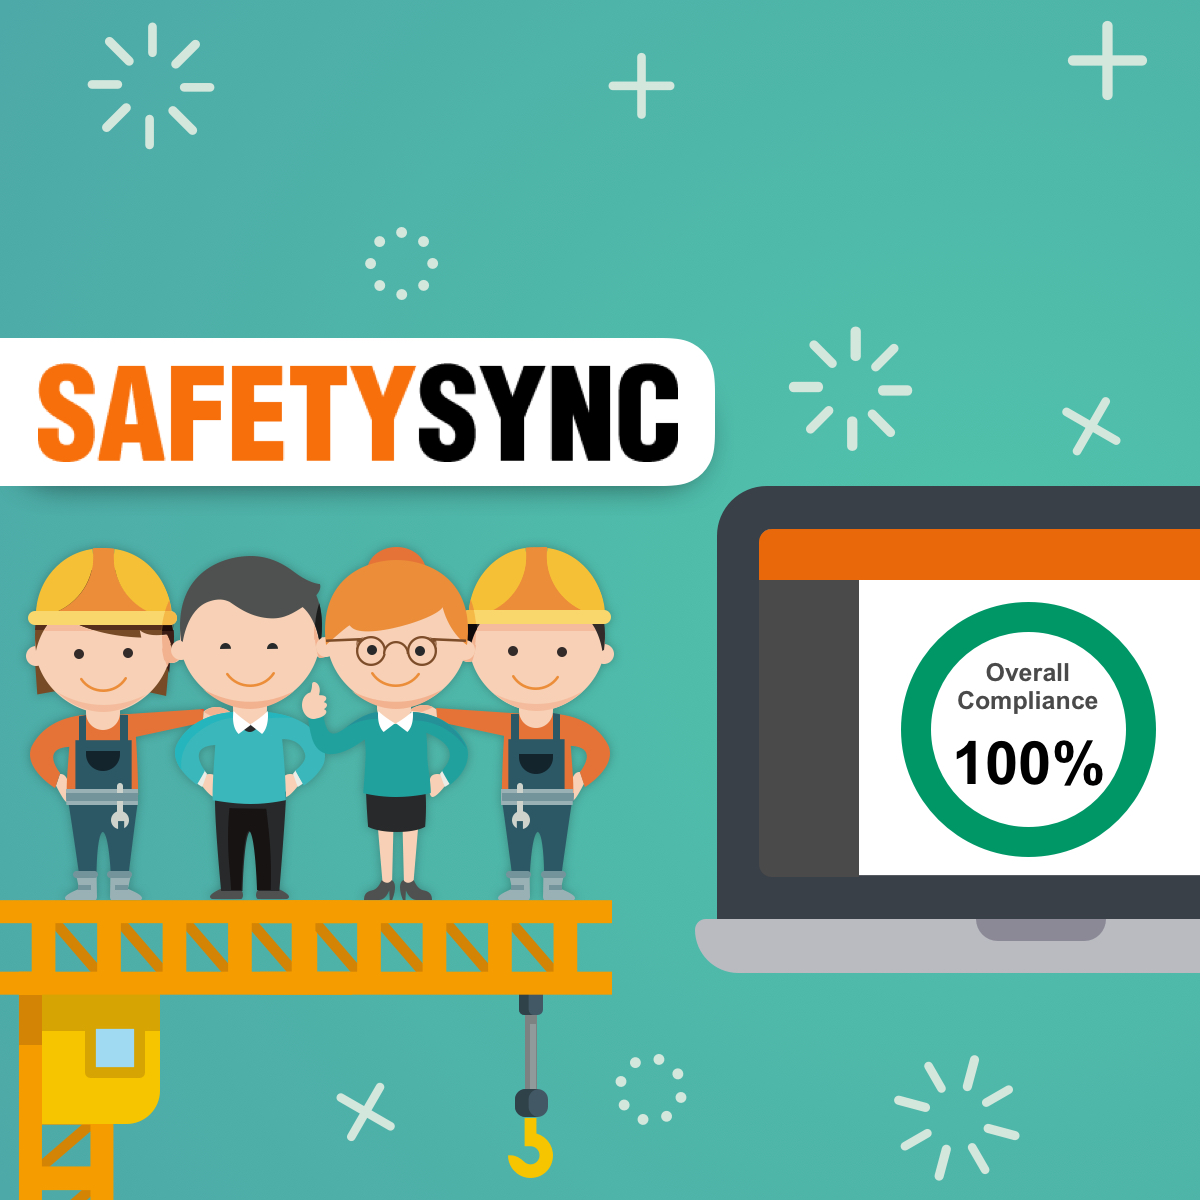 (c) Safetysync.com